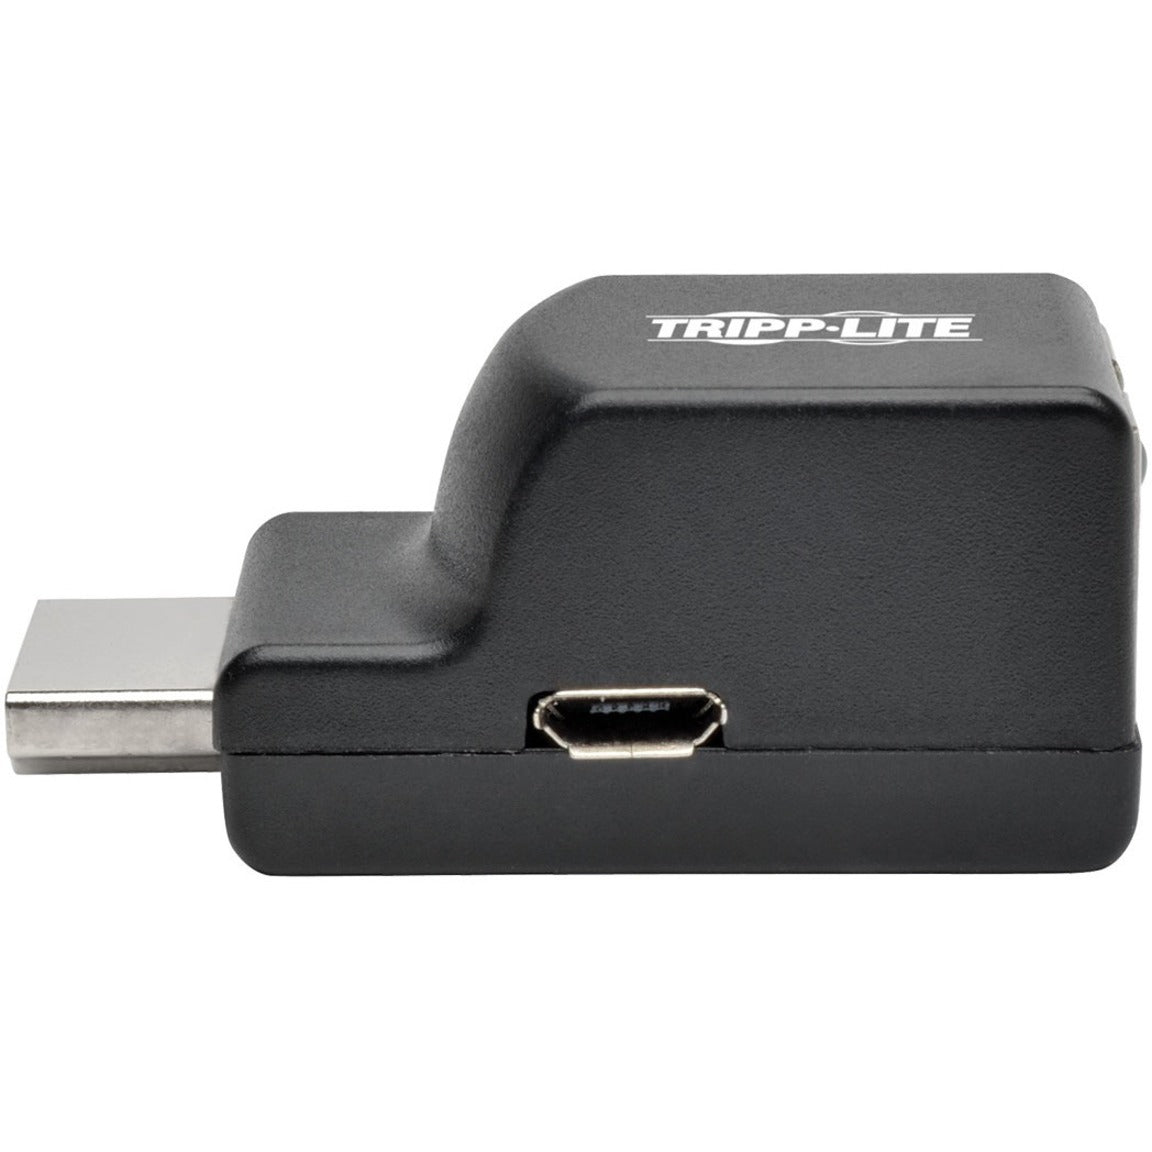 Tripp Lite B126-1P0-MINI HDMI sobre Extensor Pasivo de Cat5e/Cat6 Receptor Remoto de Perfil Bajo para Video Full HD Resolución de 1920 x 1080 Garantía de 1 Año. Marca: Tripp Lite.